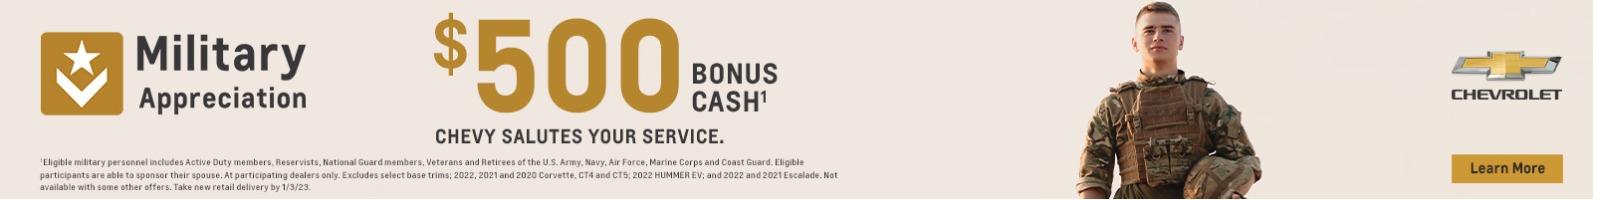 Military Discount. $500 Bonus Cash. Chevy salutes your service.